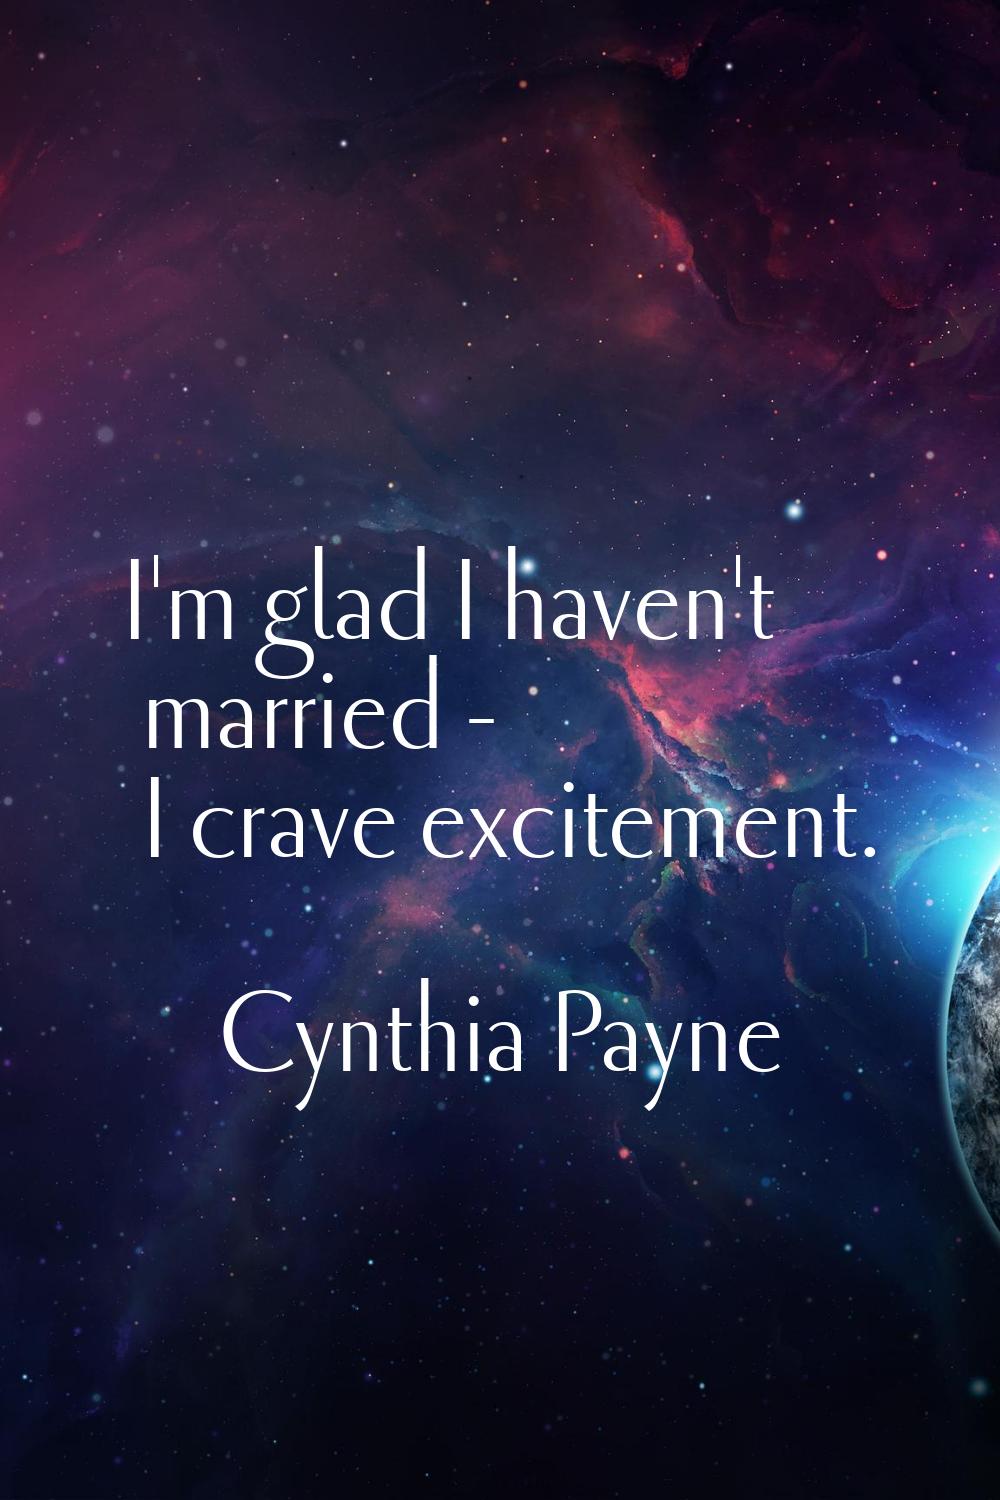 I'm glad I haven't married - I crave excitement.